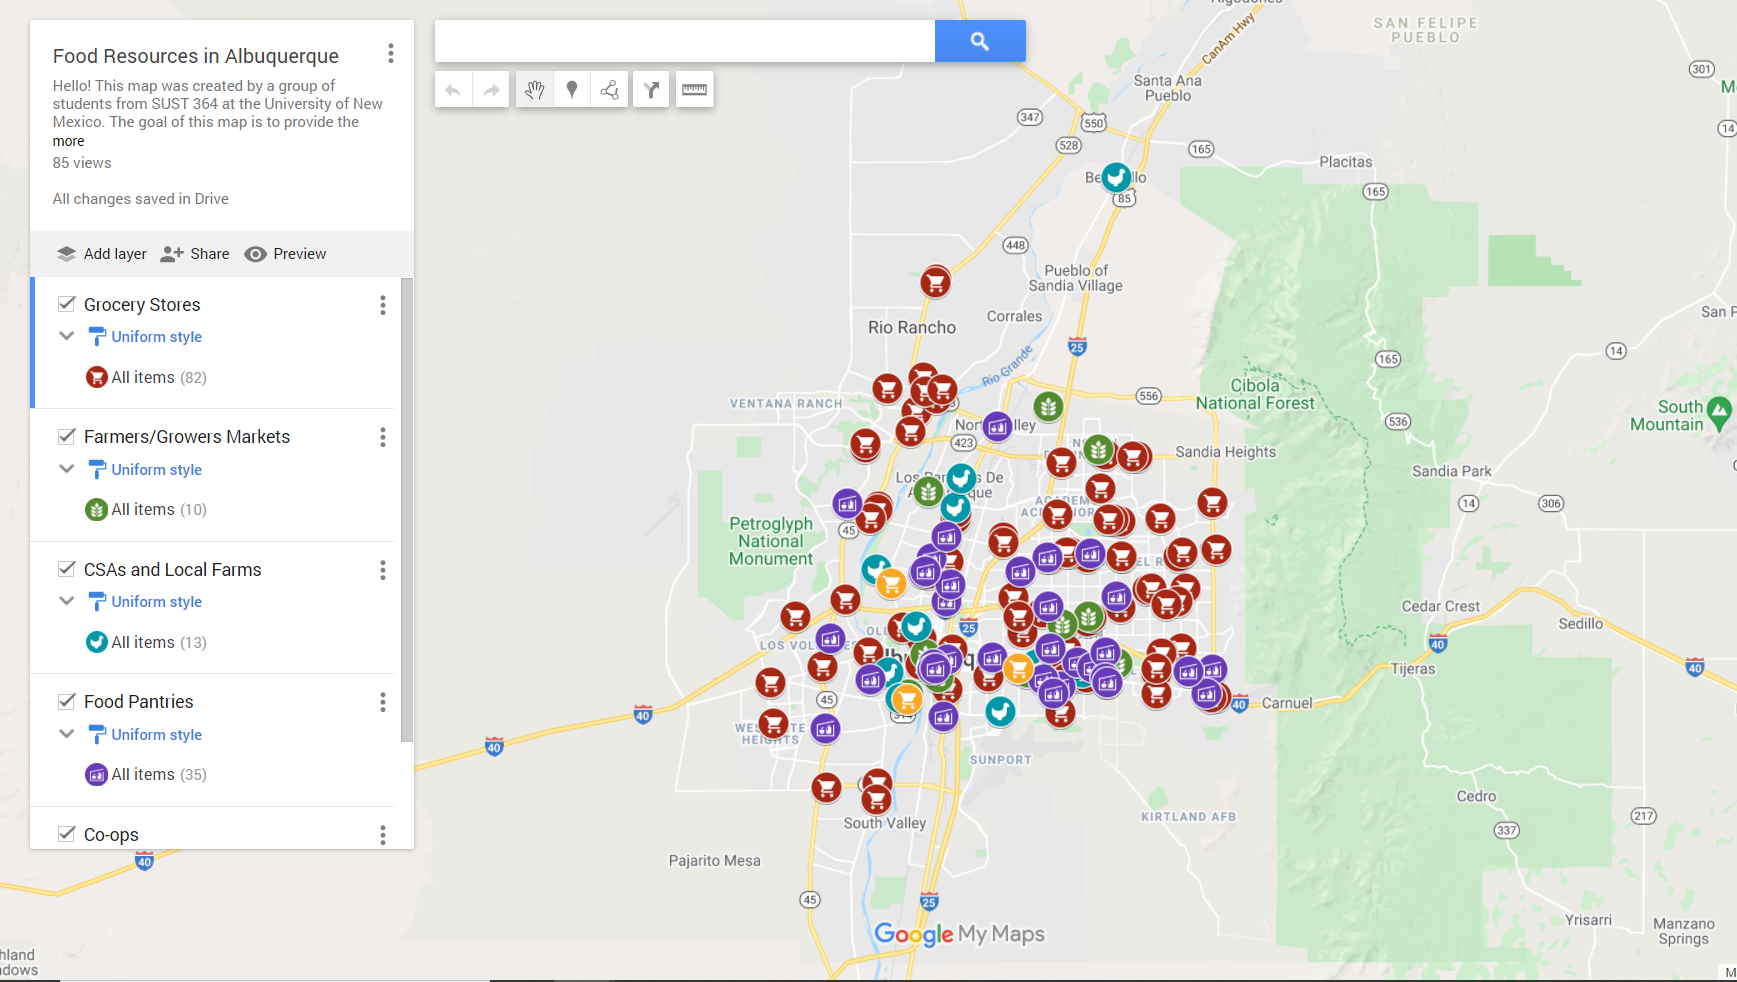 Photo: Map of Food Resources in Albuquerque